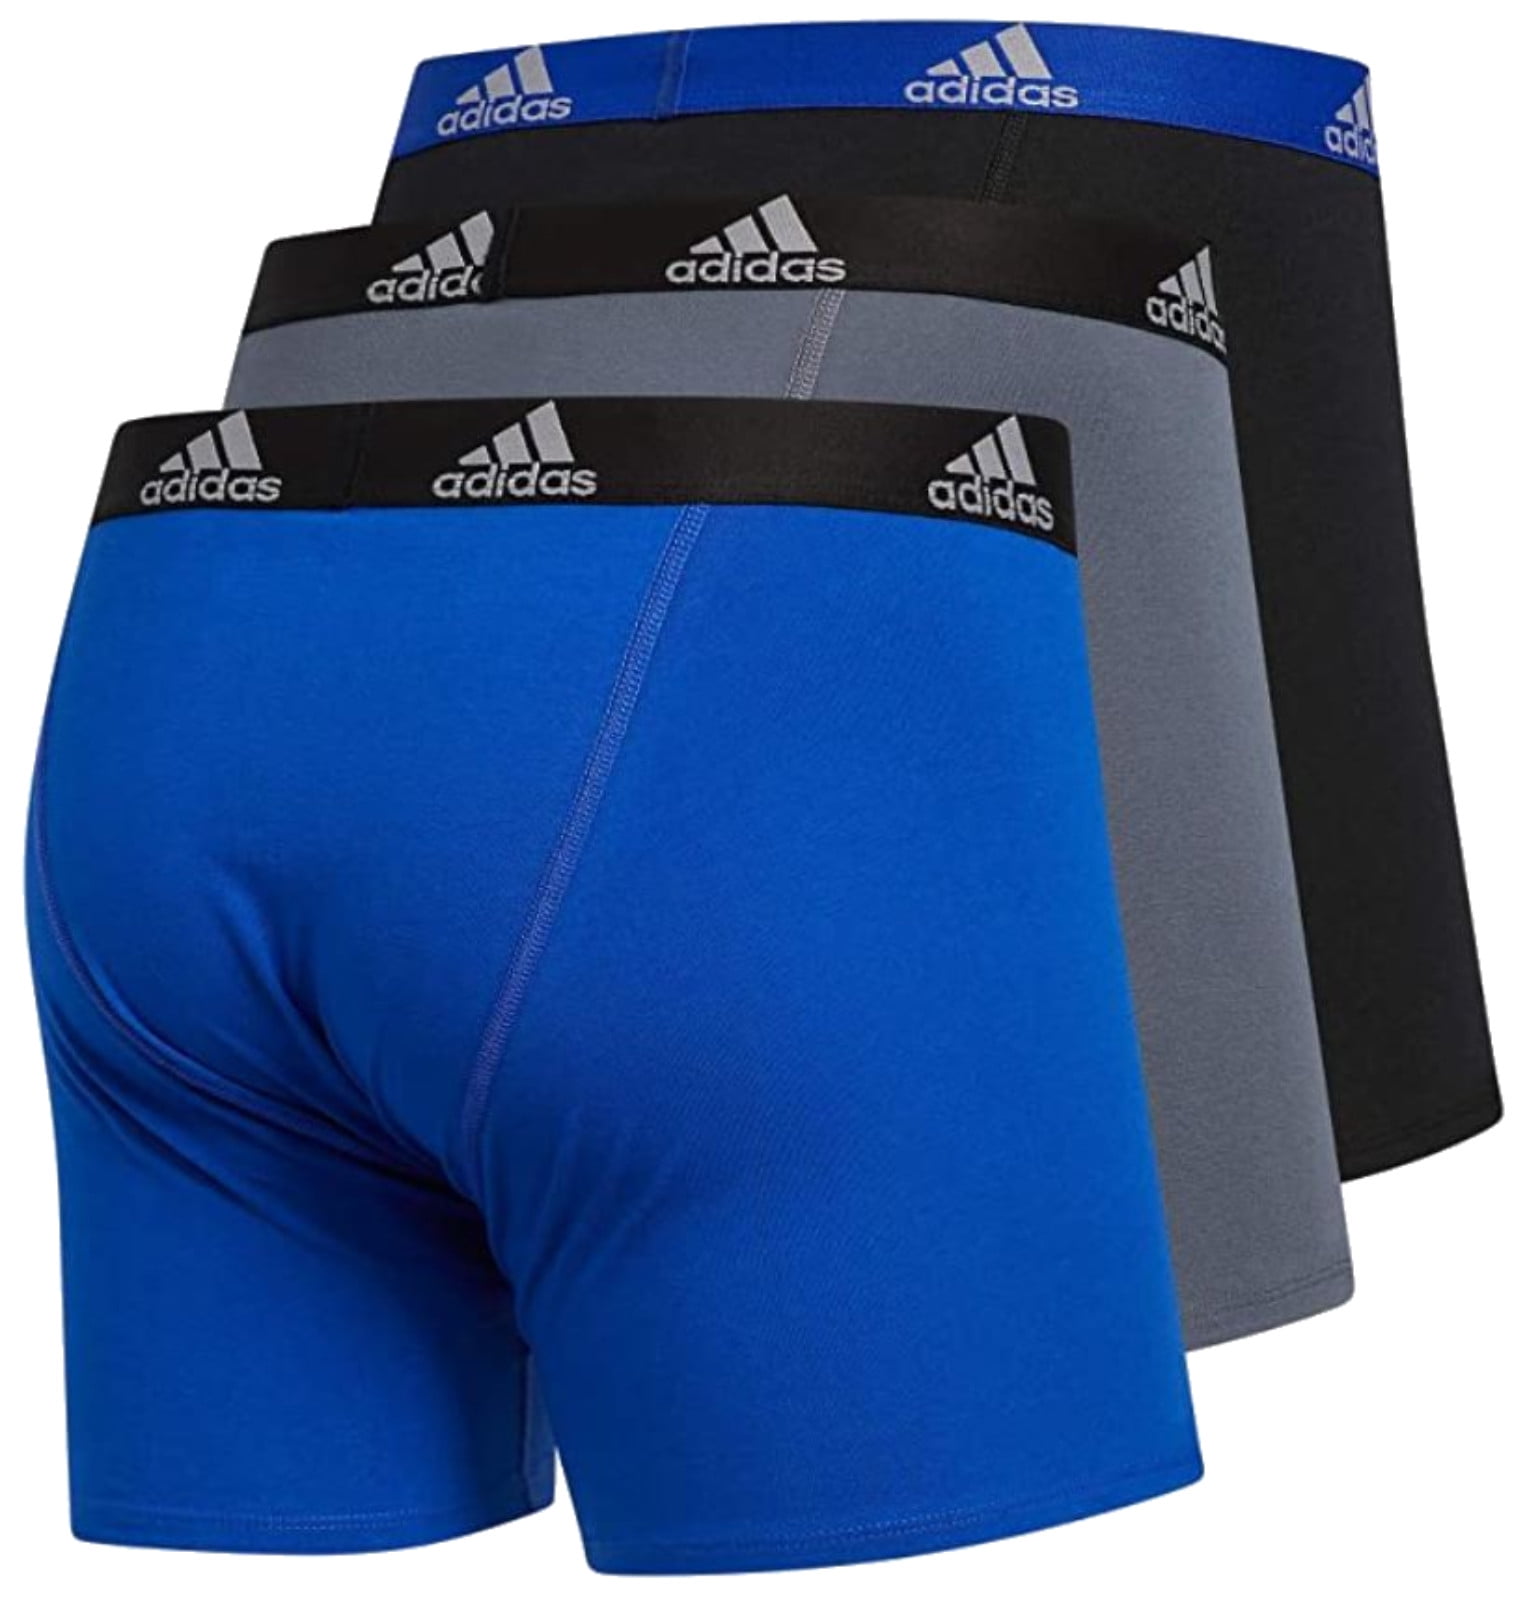  Adidas Mens Performance Trunk Underwear